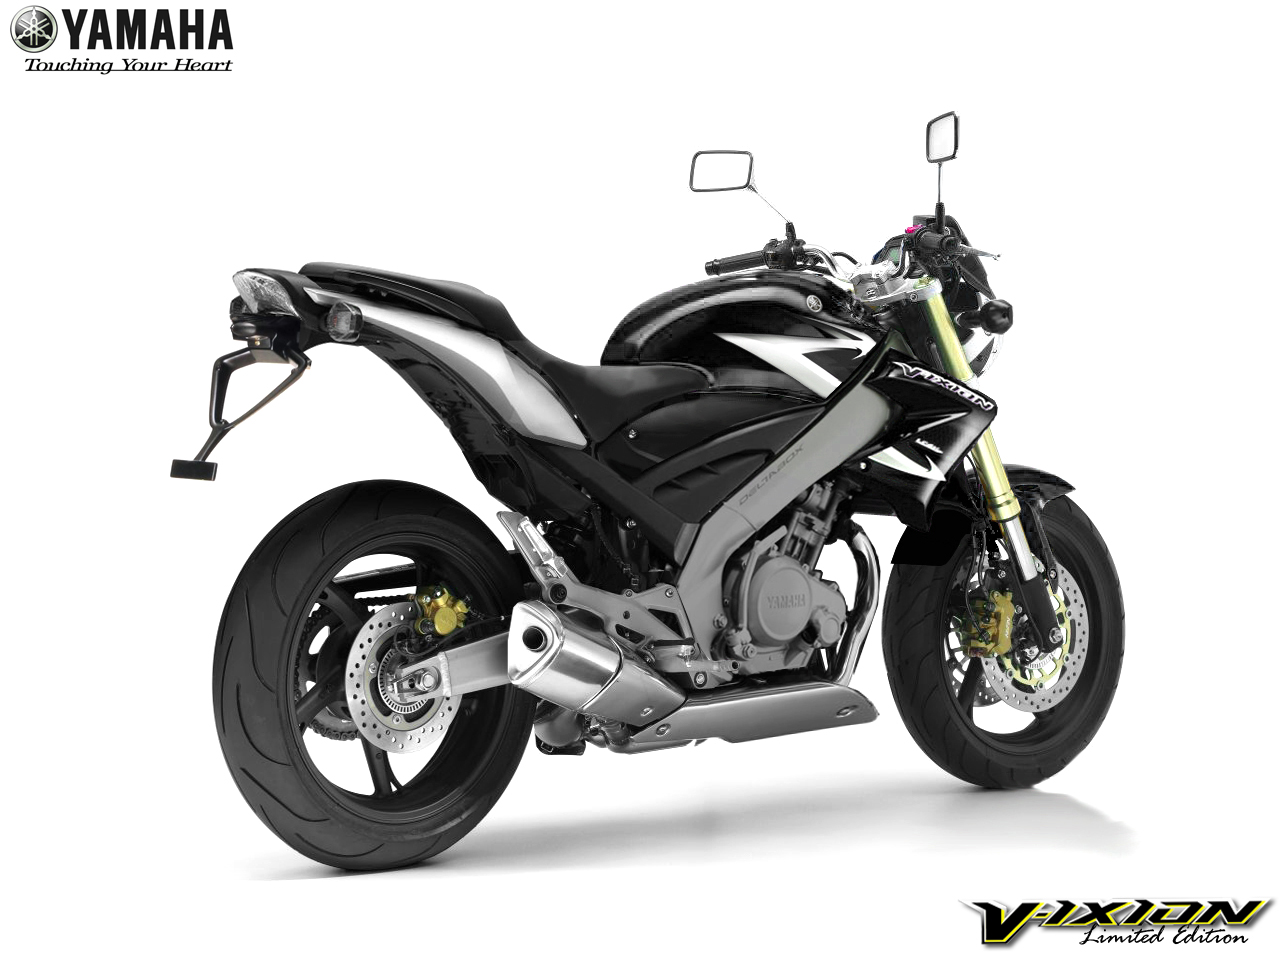 YAMAHA VIXION  Limited EDITION motor  modif contest 